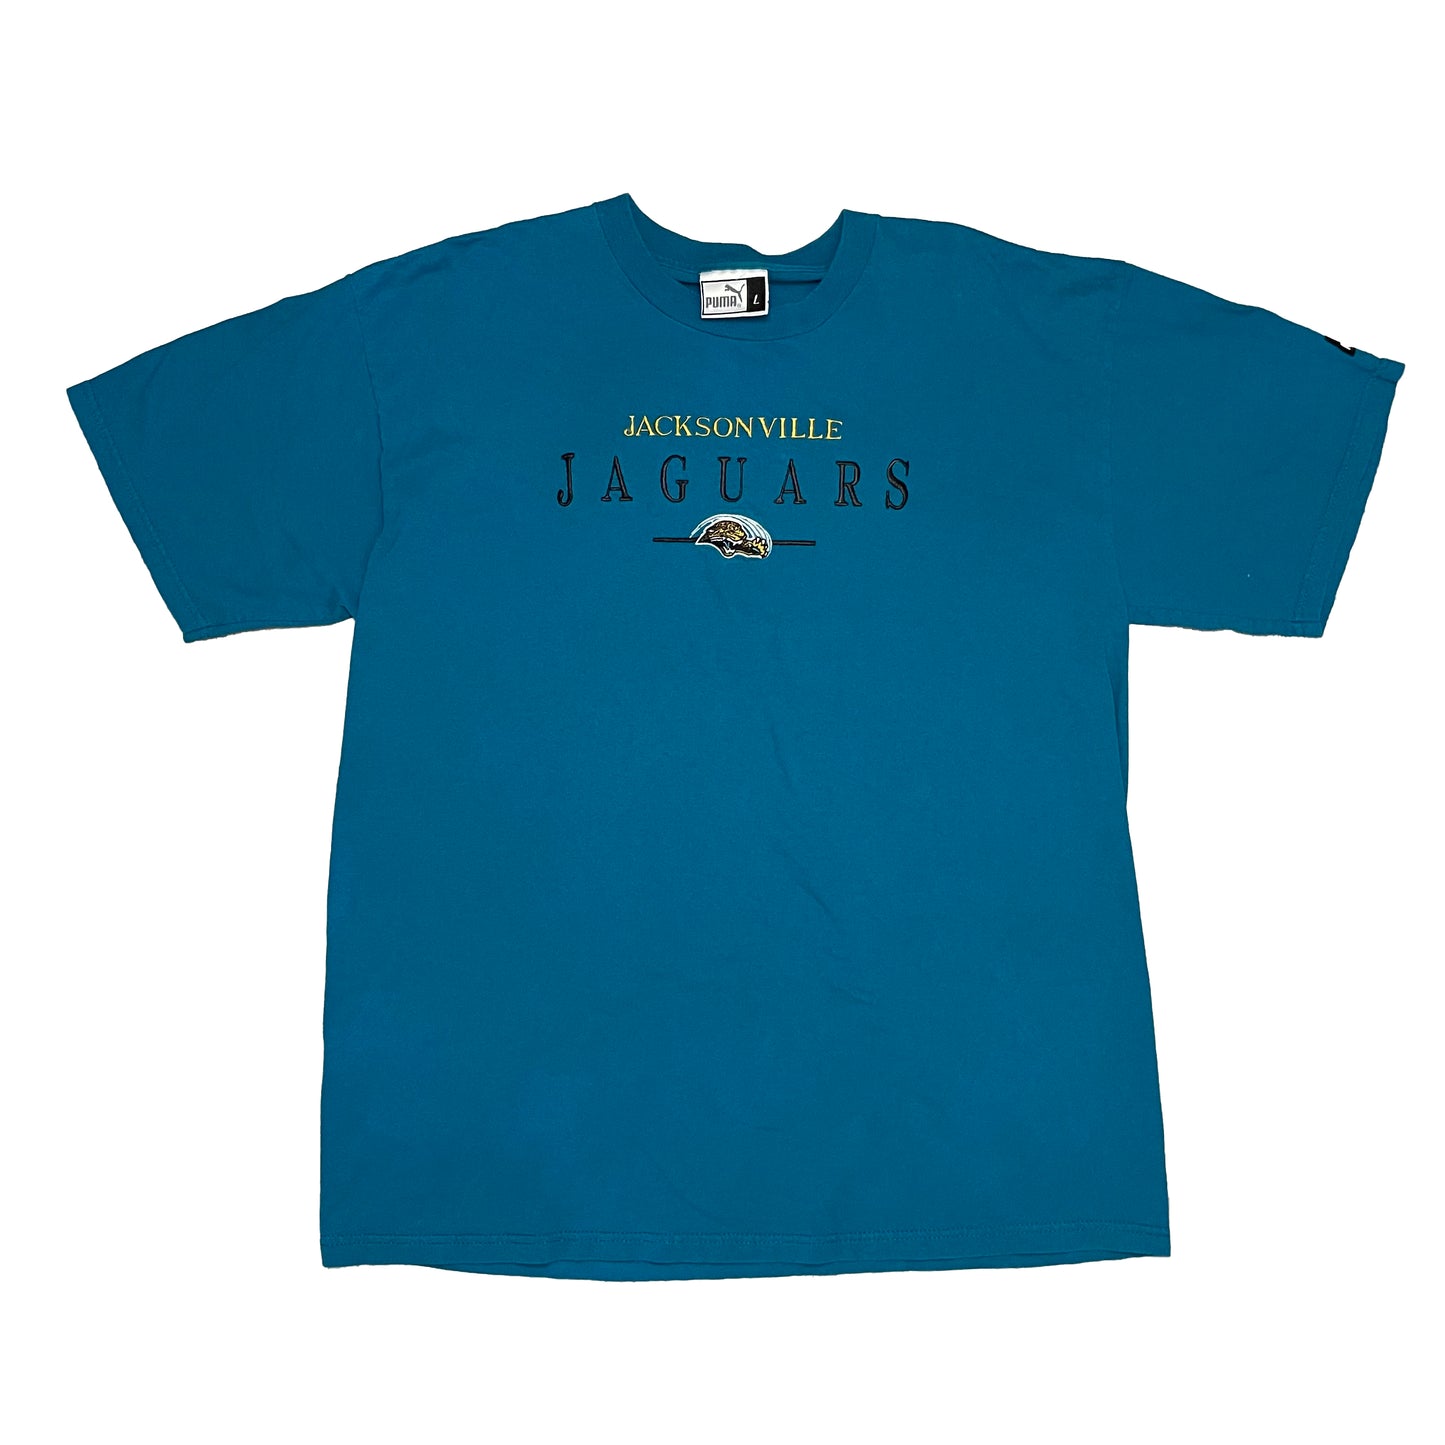 Jacksonville Jaguars embroidered shirt